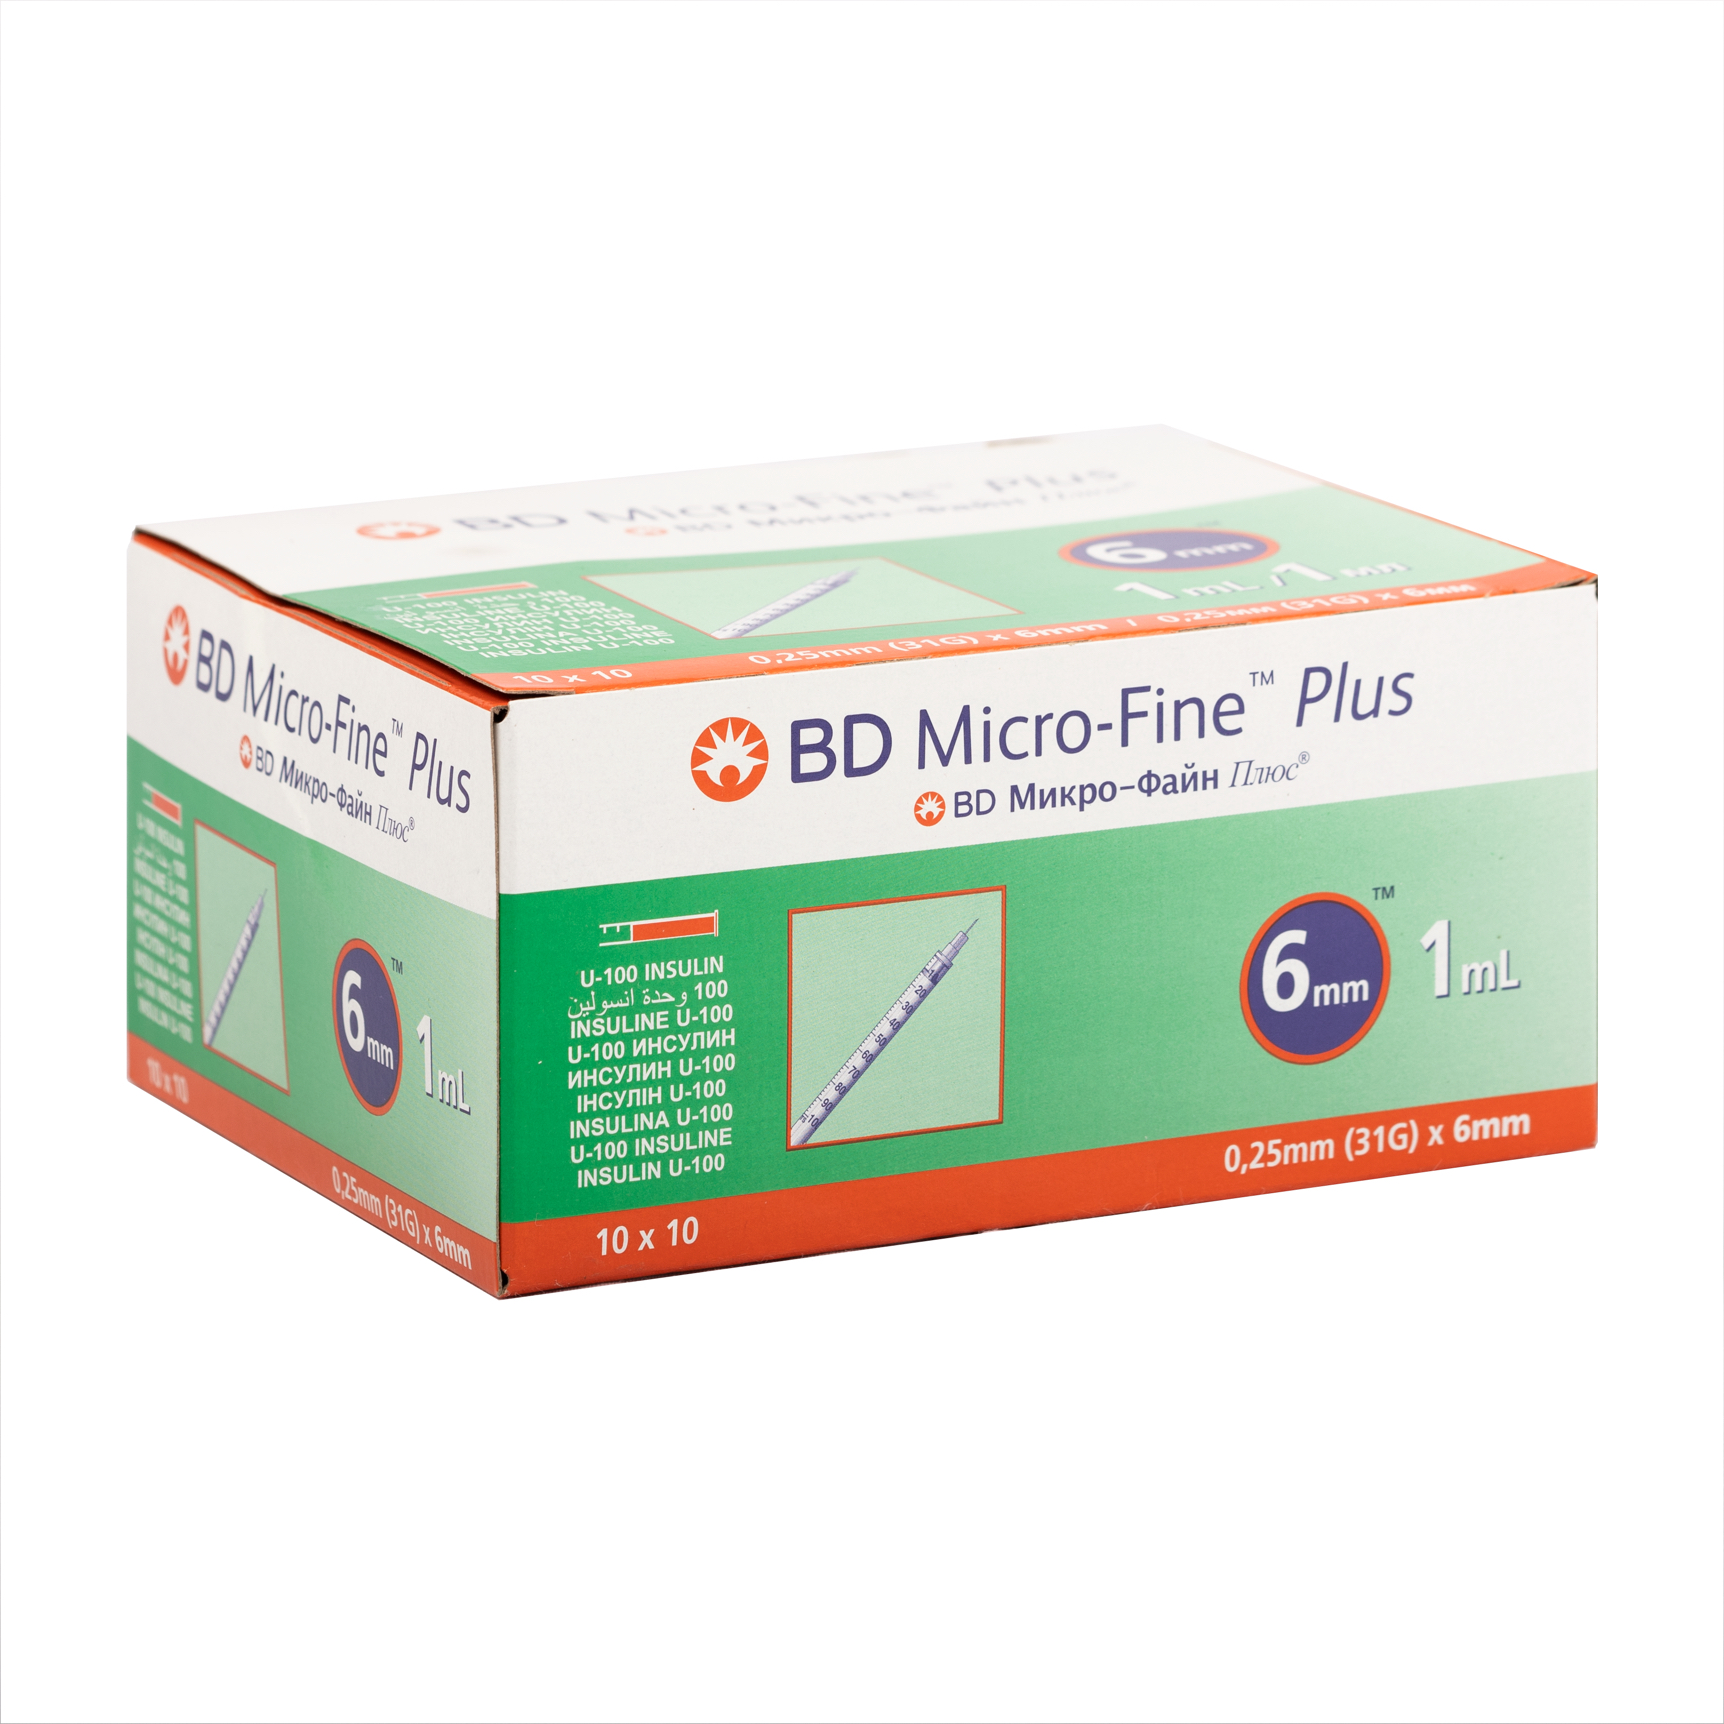 Bd Micro-Fine Plus İnsülin Enjektörü 1Ml 31G 6Mm 1 Paket 100 Adet